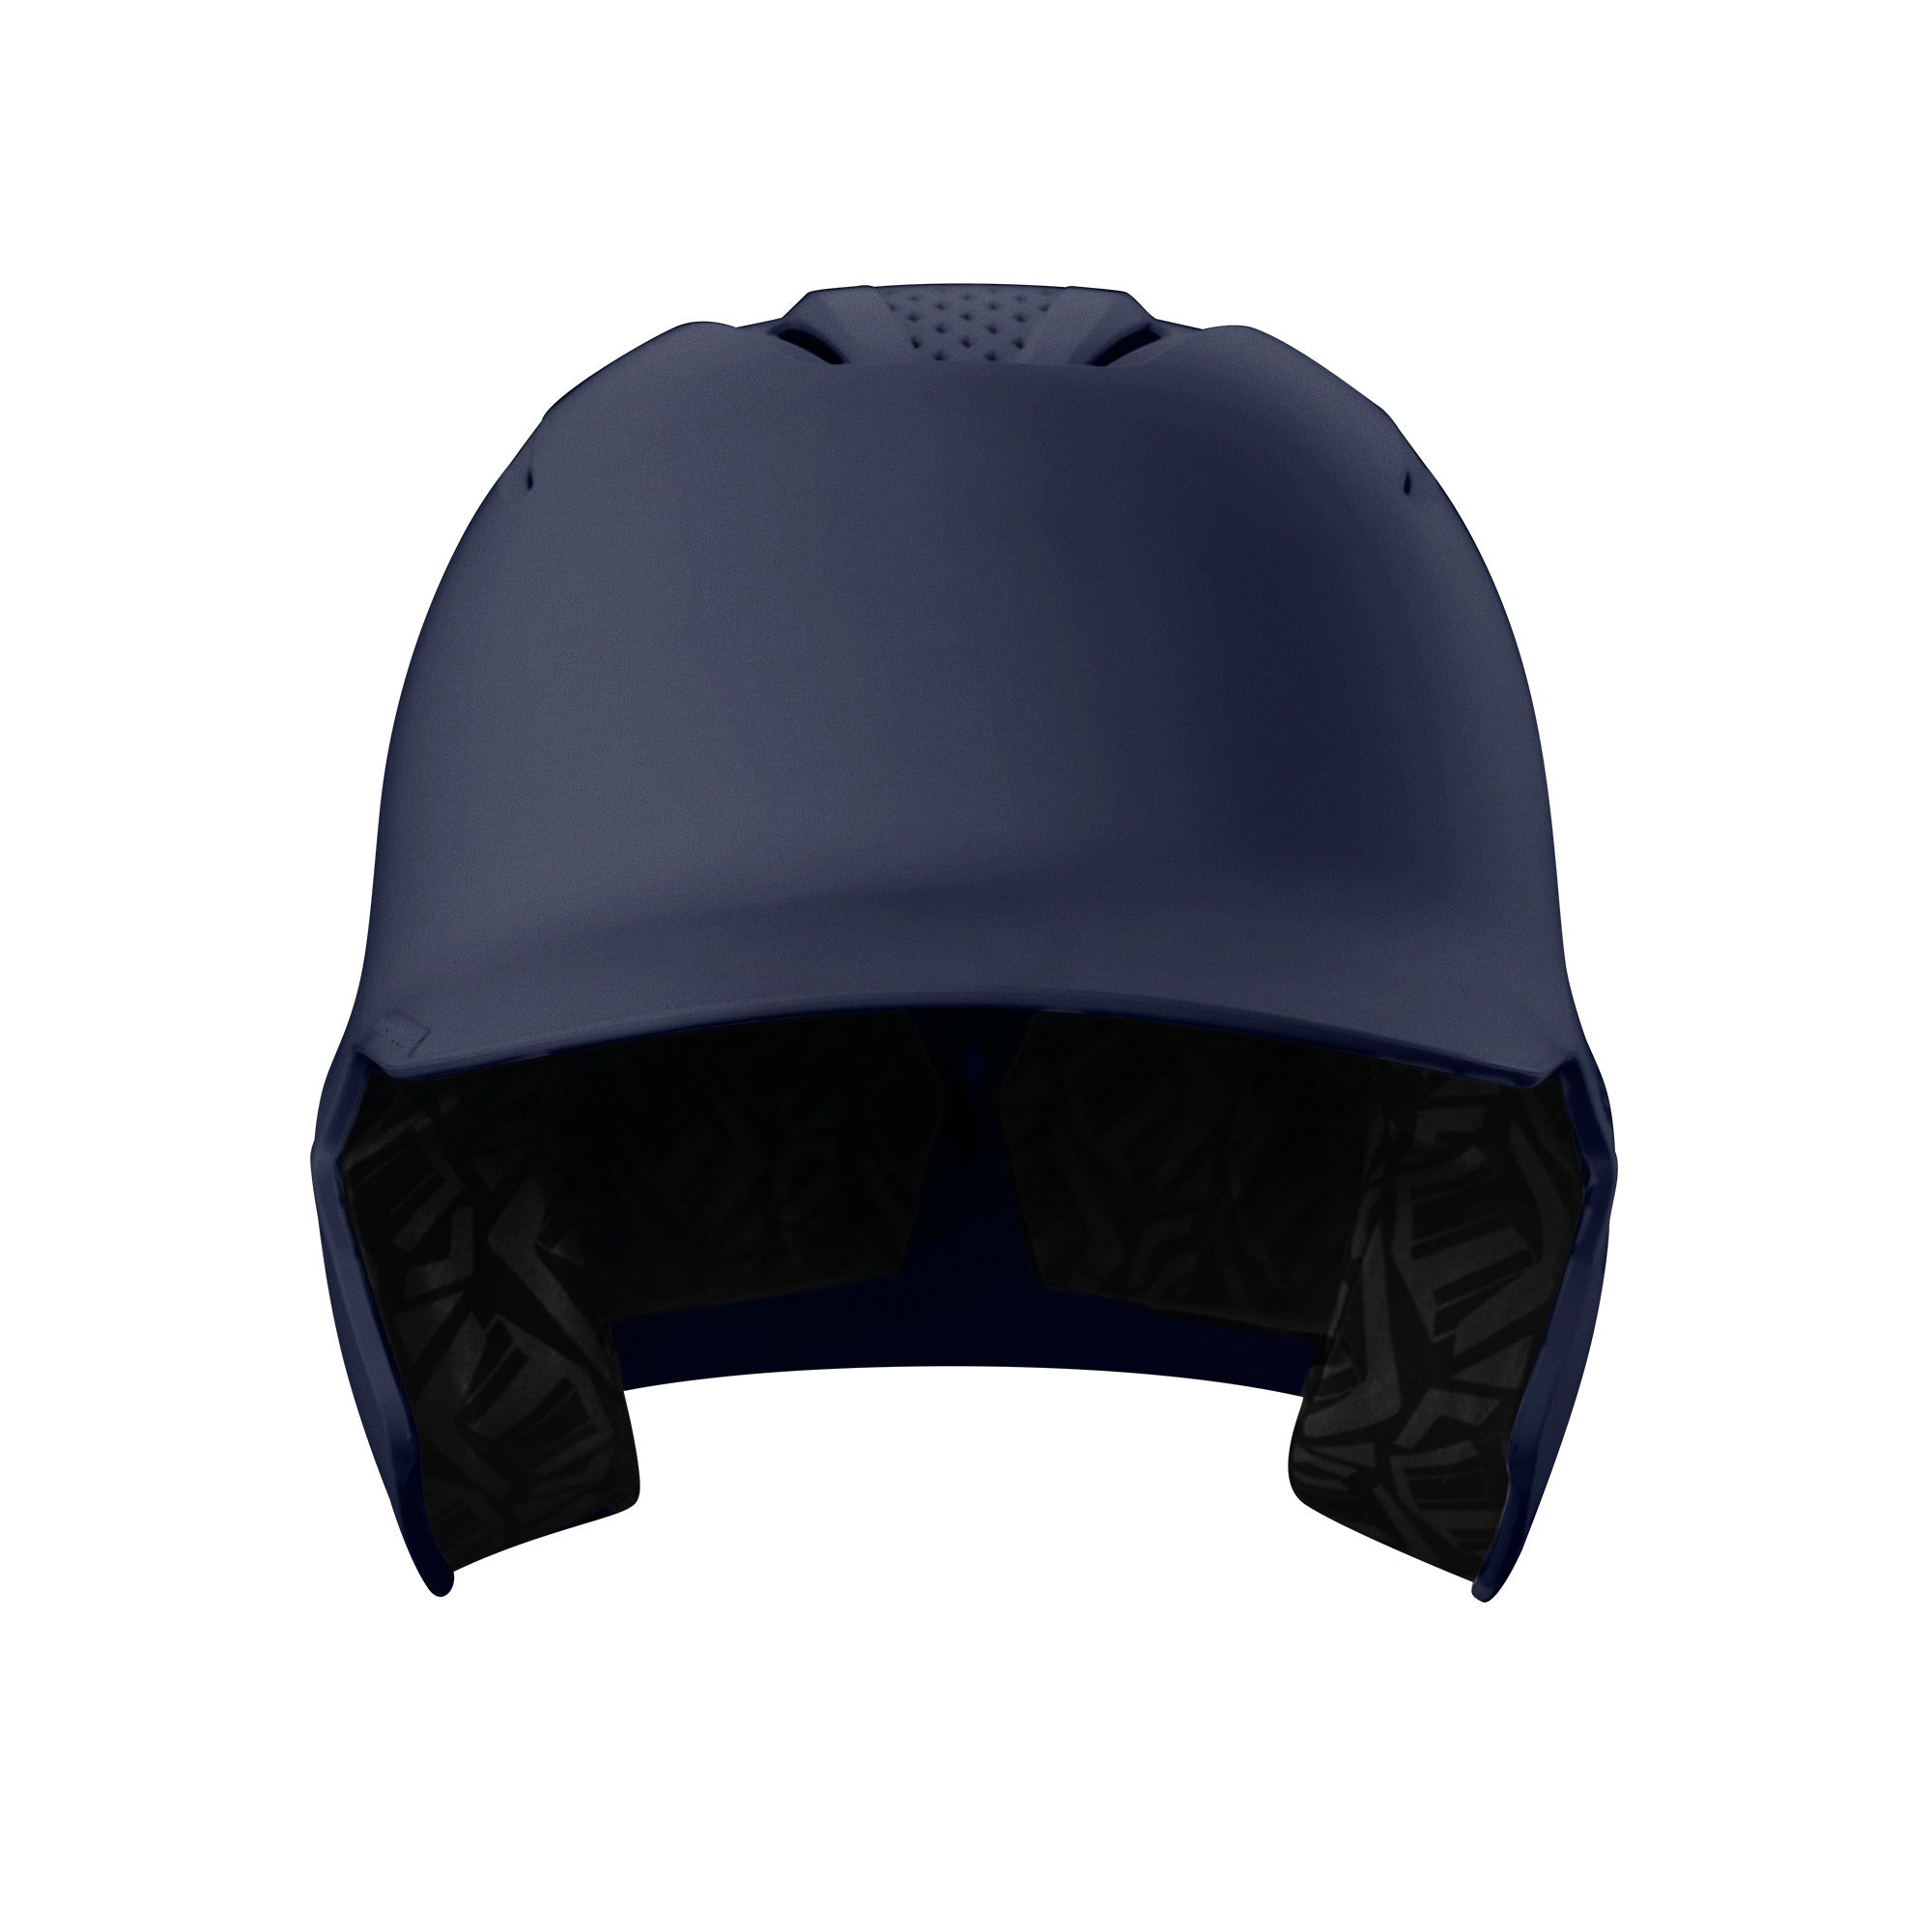 Evoshield XVT 2.0 Matte Batting Helmet Navy